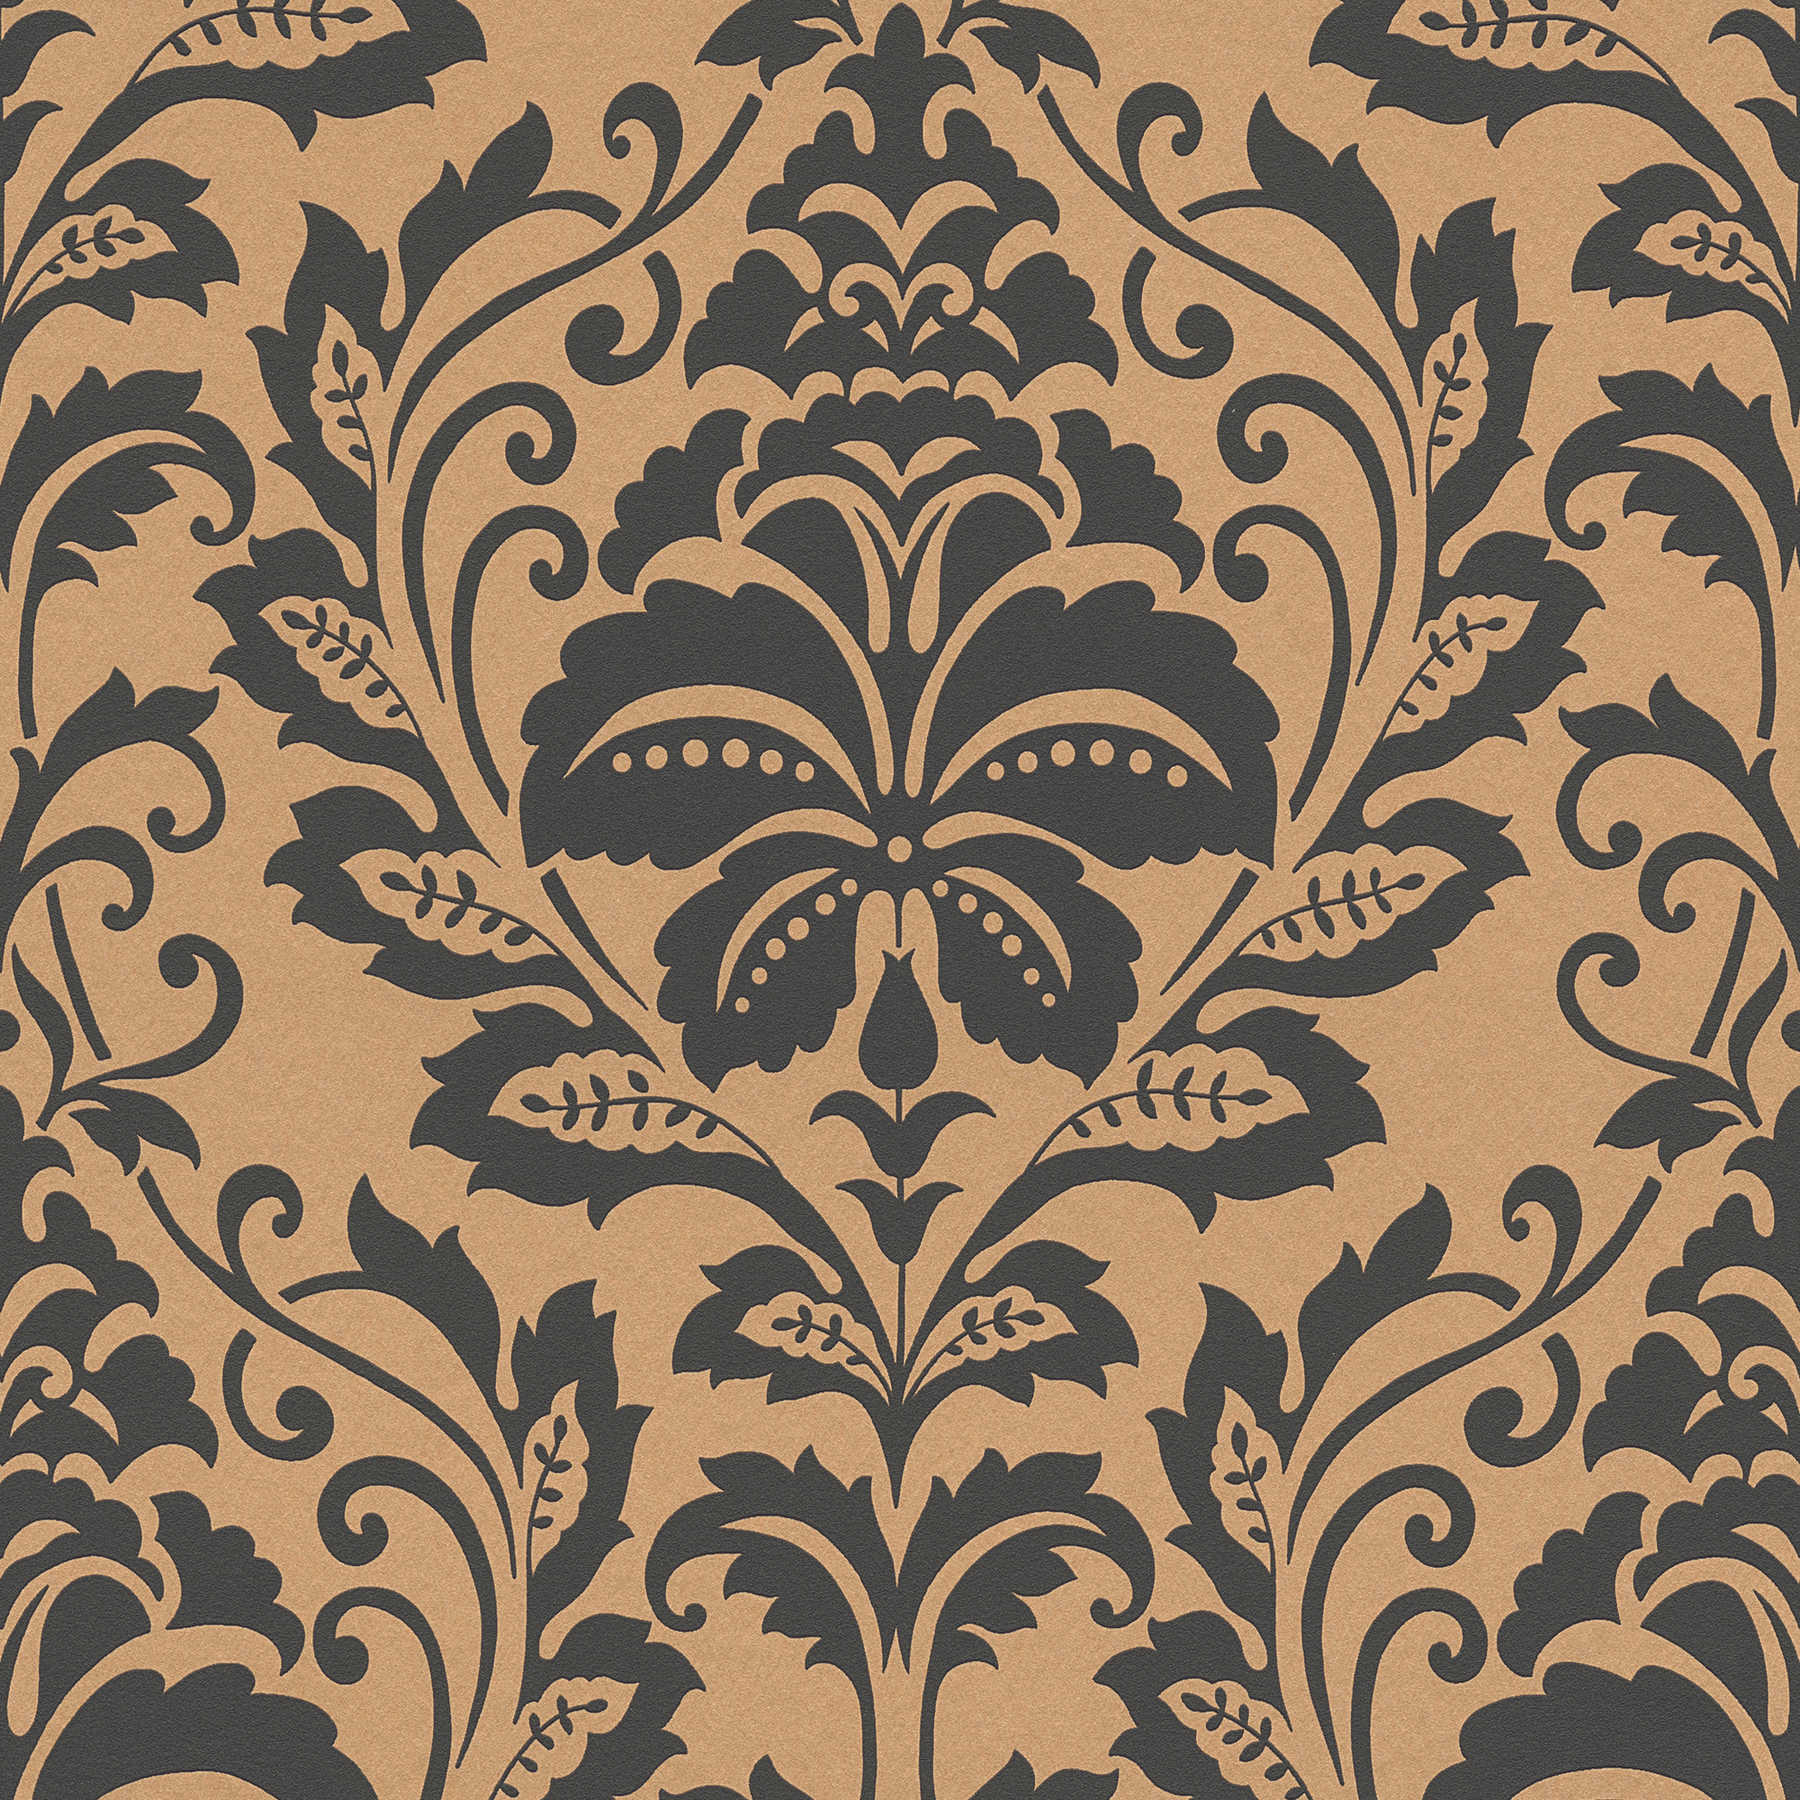 Neo-Klassik Ornament Tapete, floral – Braun, Orange
